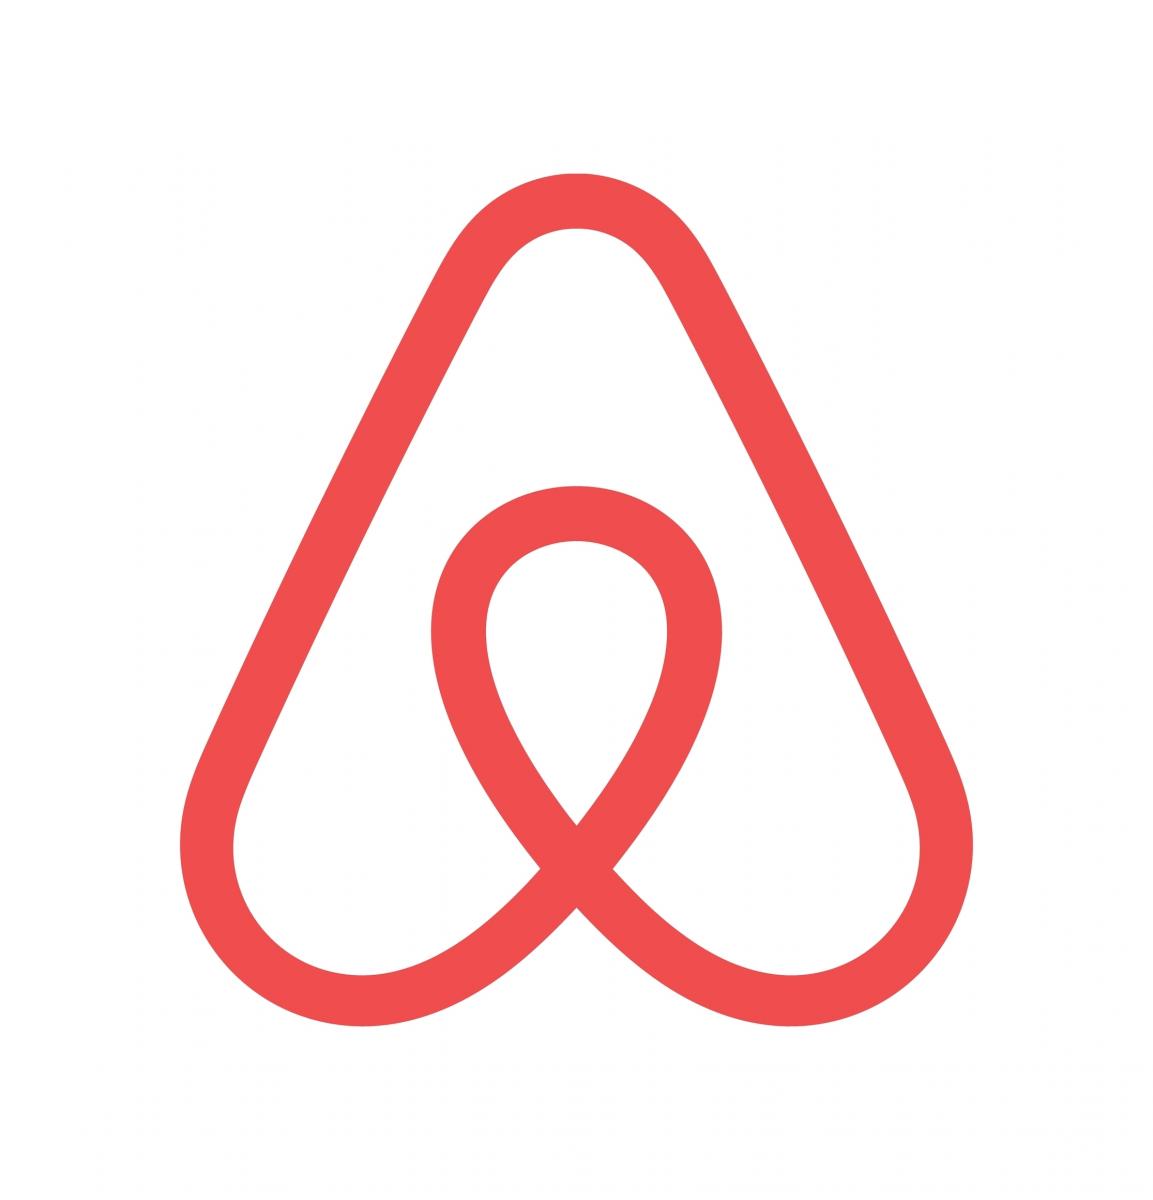 Propertymark backs controversial Airbnb registration scheme 